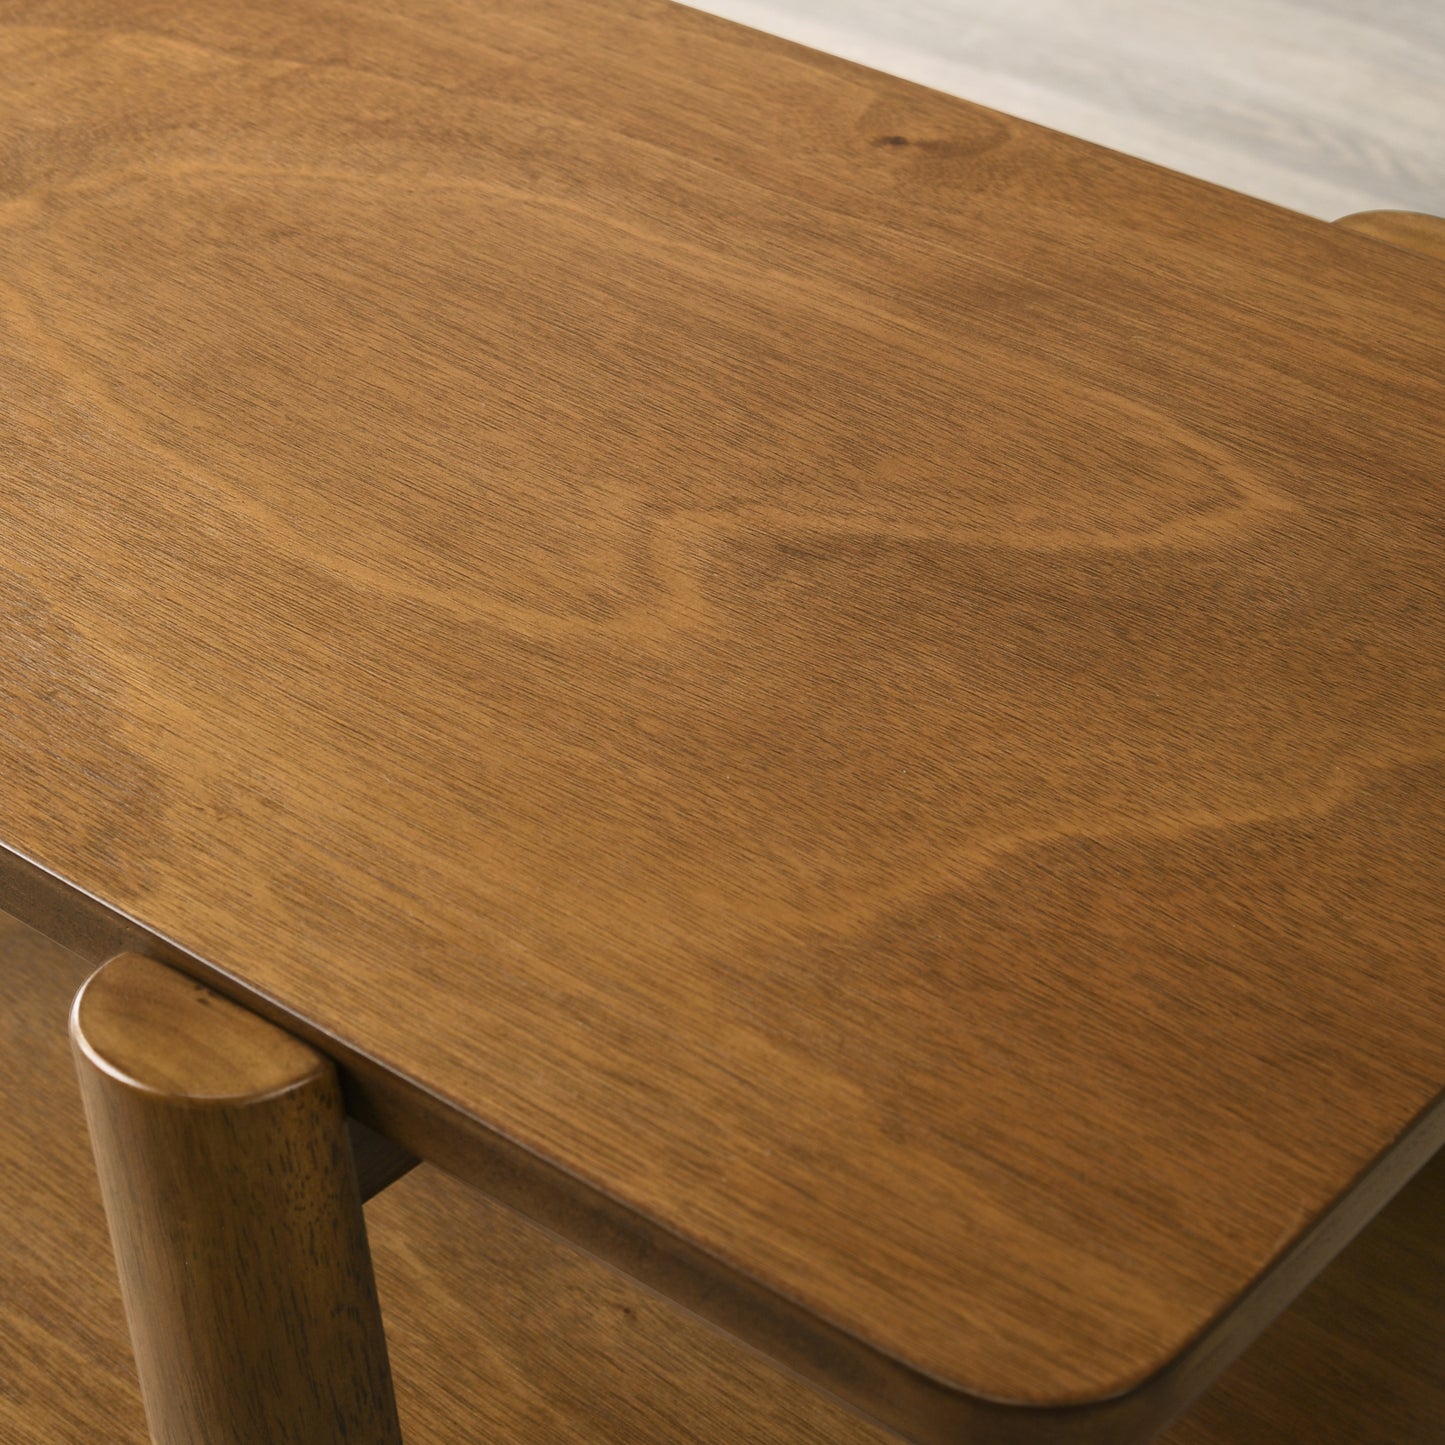 Metz Mid-Century Modern Wood Shelf Coffee Table, Walnut Finish